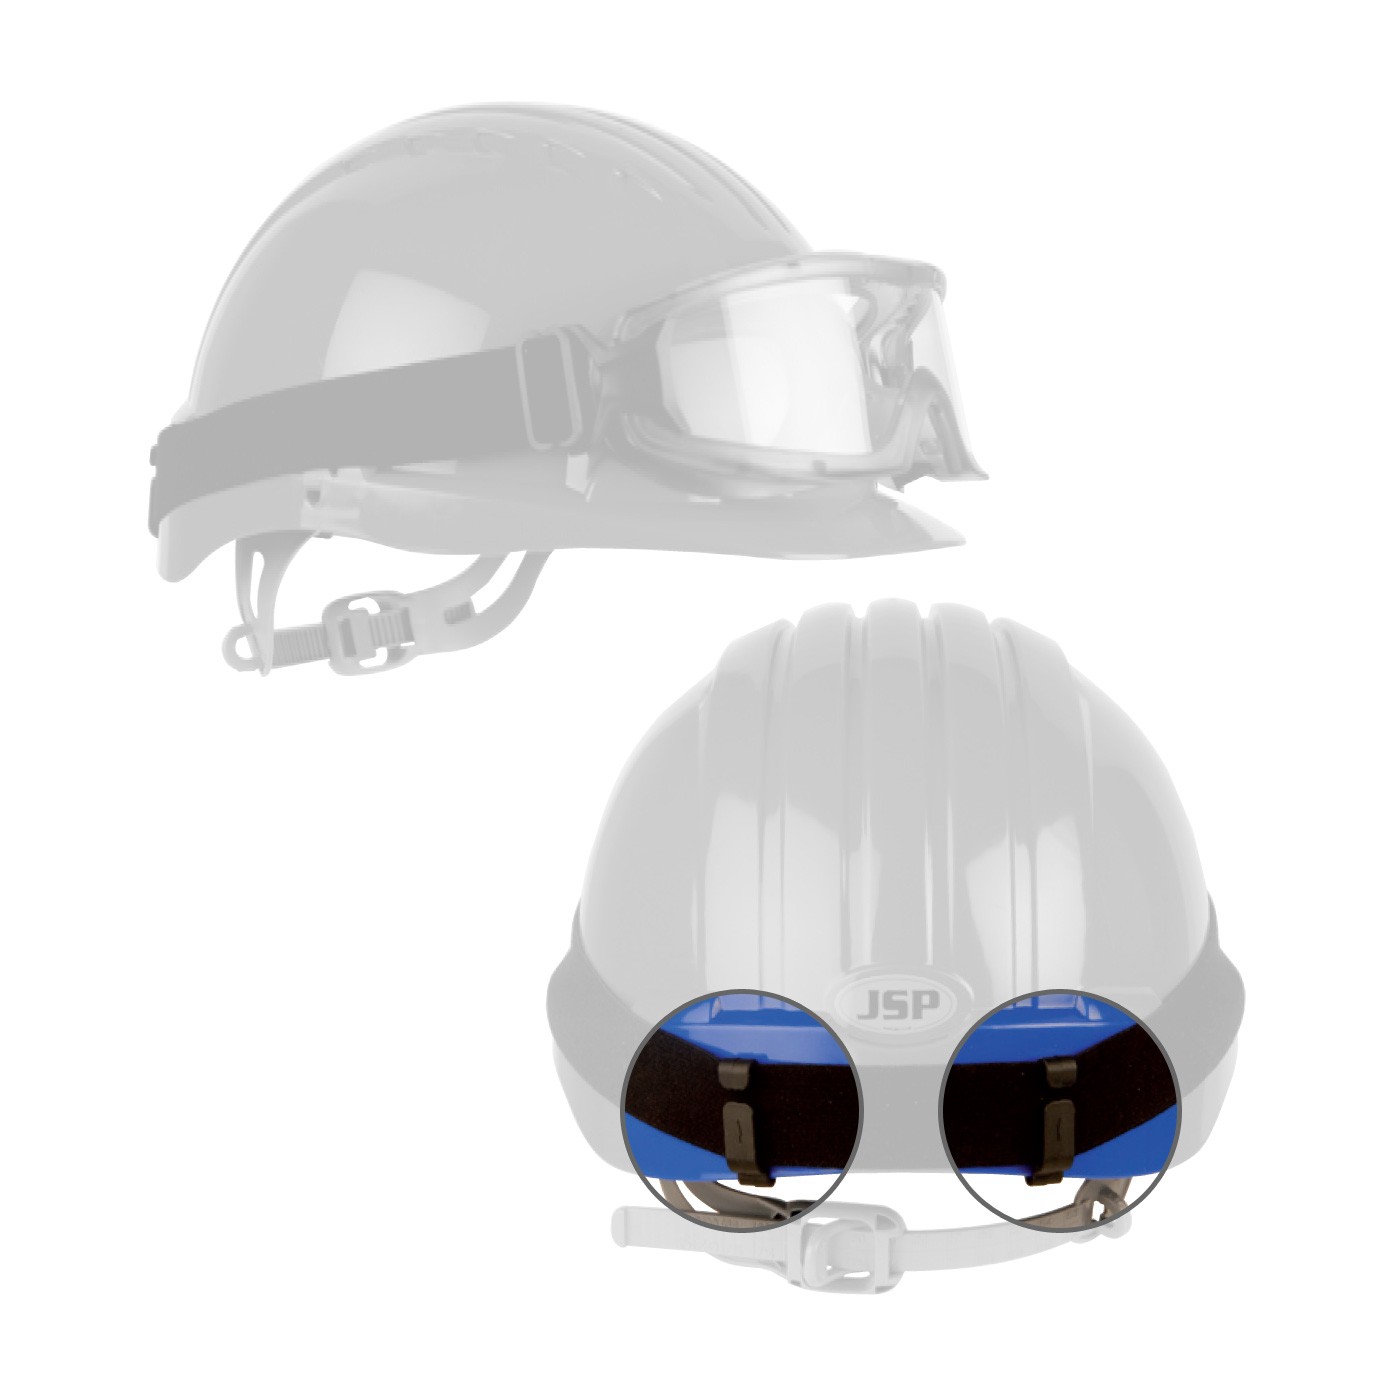 Clip Set for Lamp/Goggle Attachment Evolution 6100 Cap Style Hard Hats